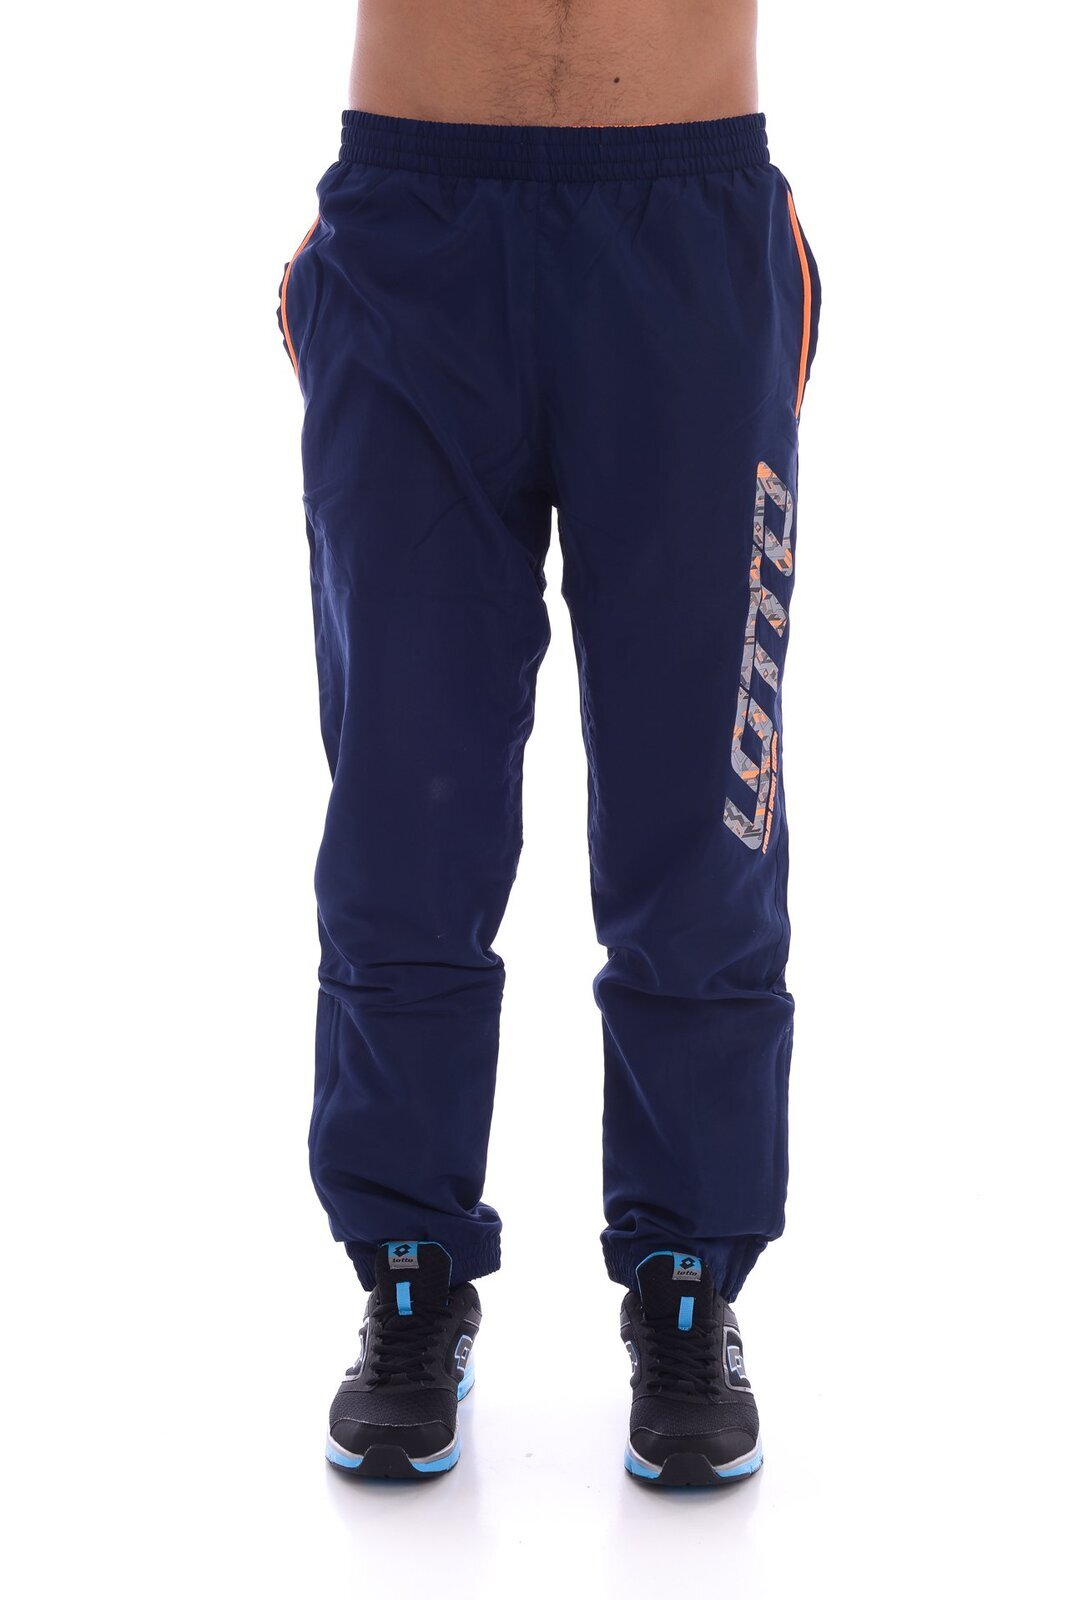 Lotto,Men's Devin IV RIB Sports Training Track Pants - Navy/Orange